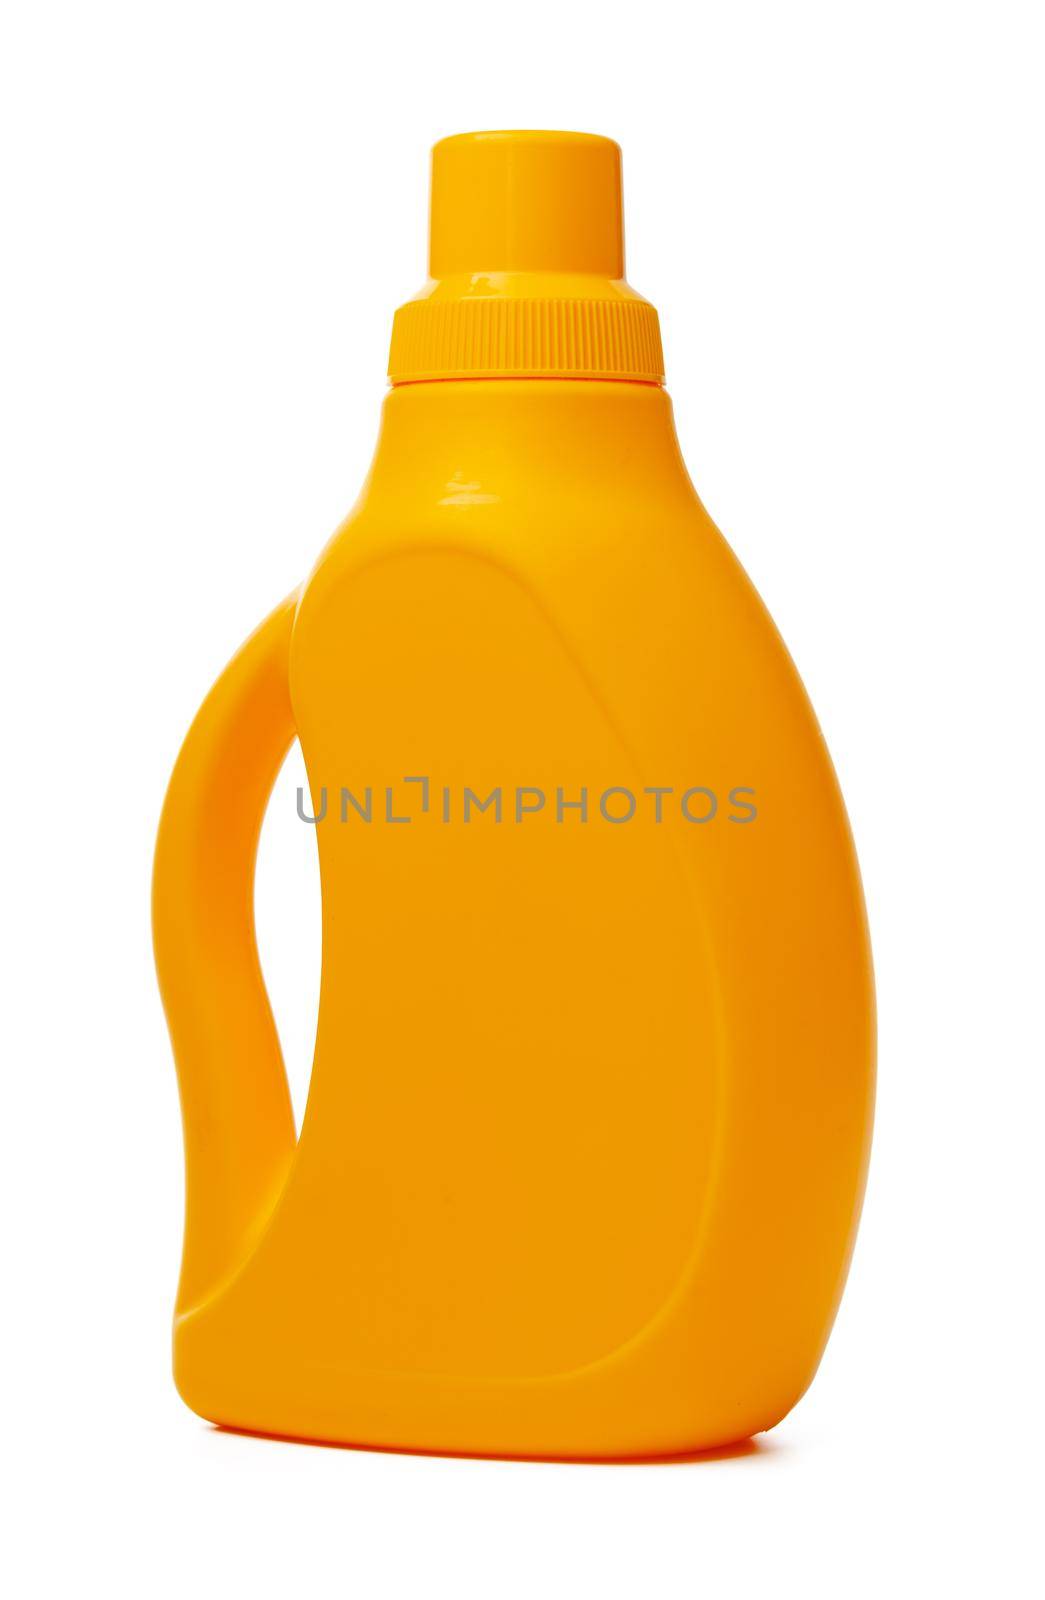 Orange plastic bottle of liquid detergent isolated on white background